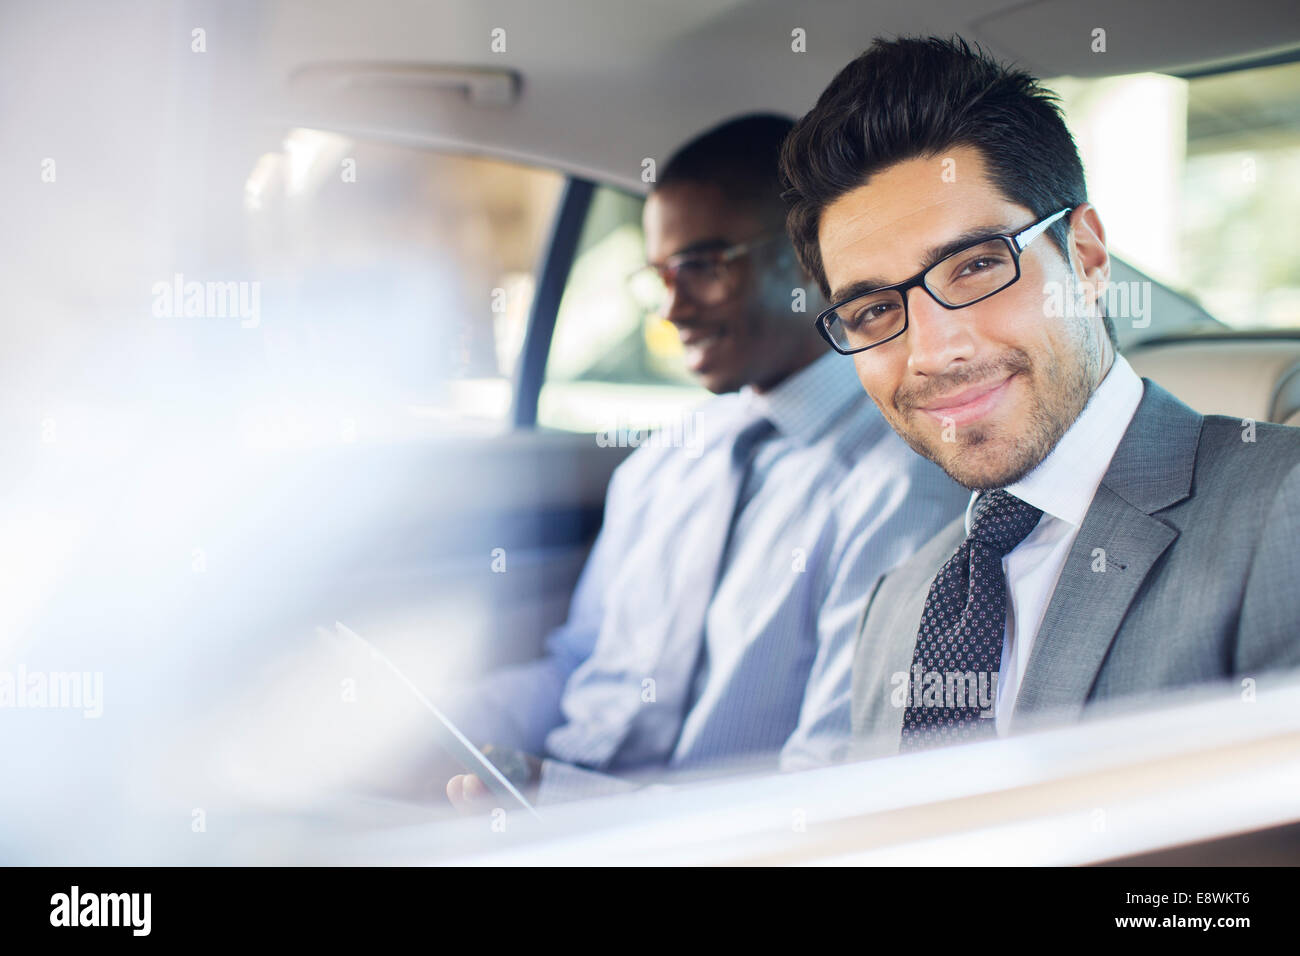 Businessman using digital tablet in car back seat Stock Photo